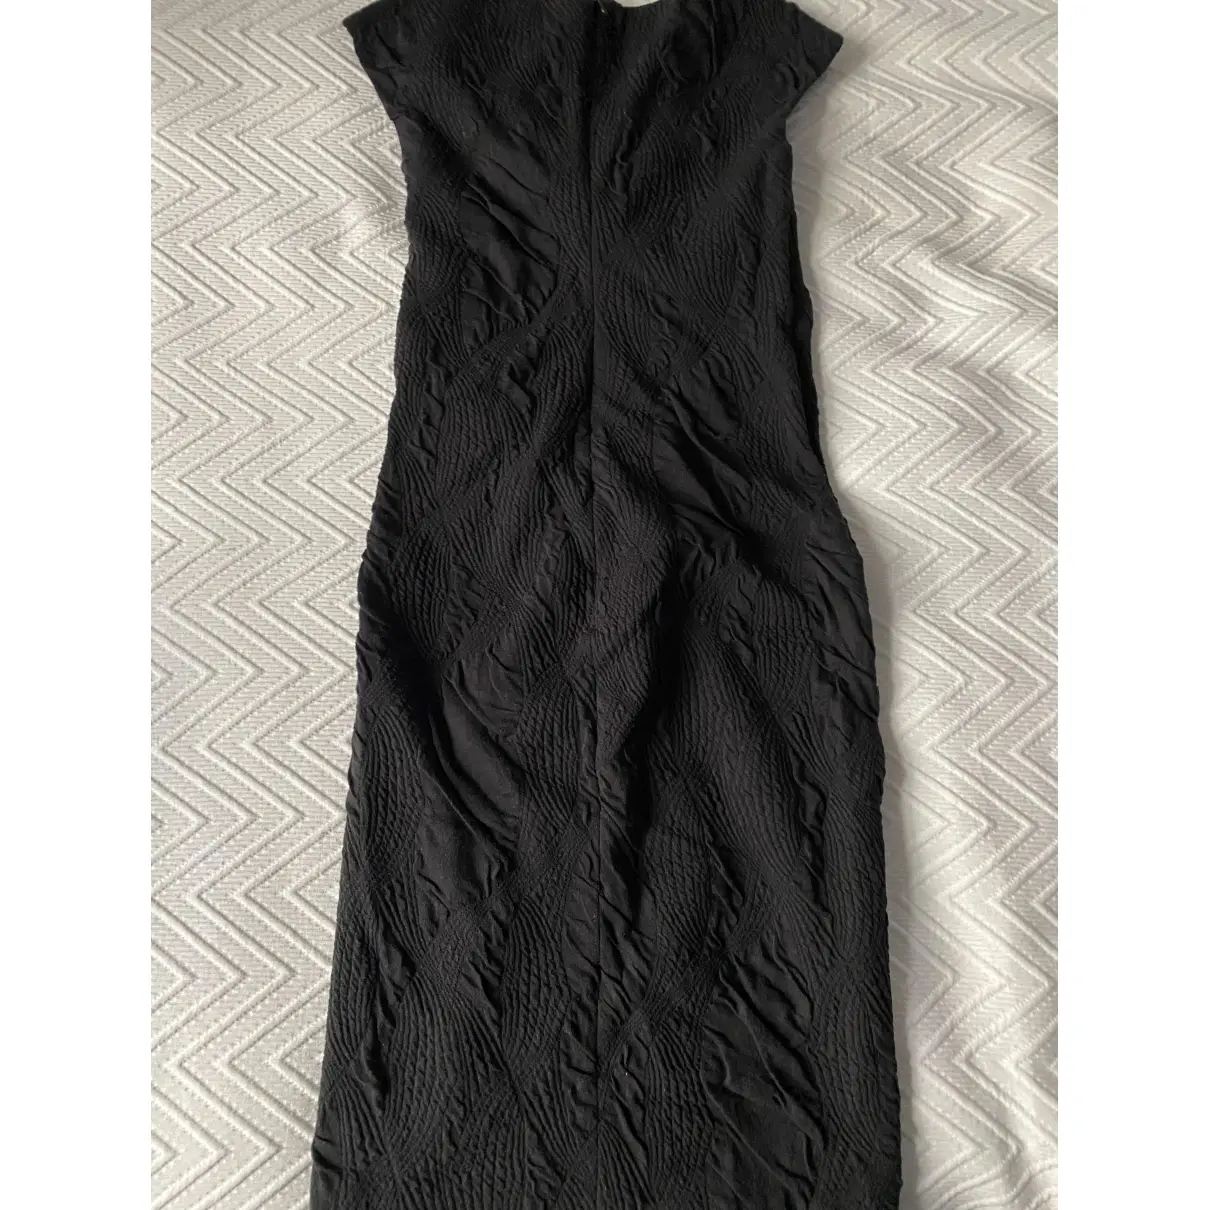 Buy Ixos Mid-length dress online